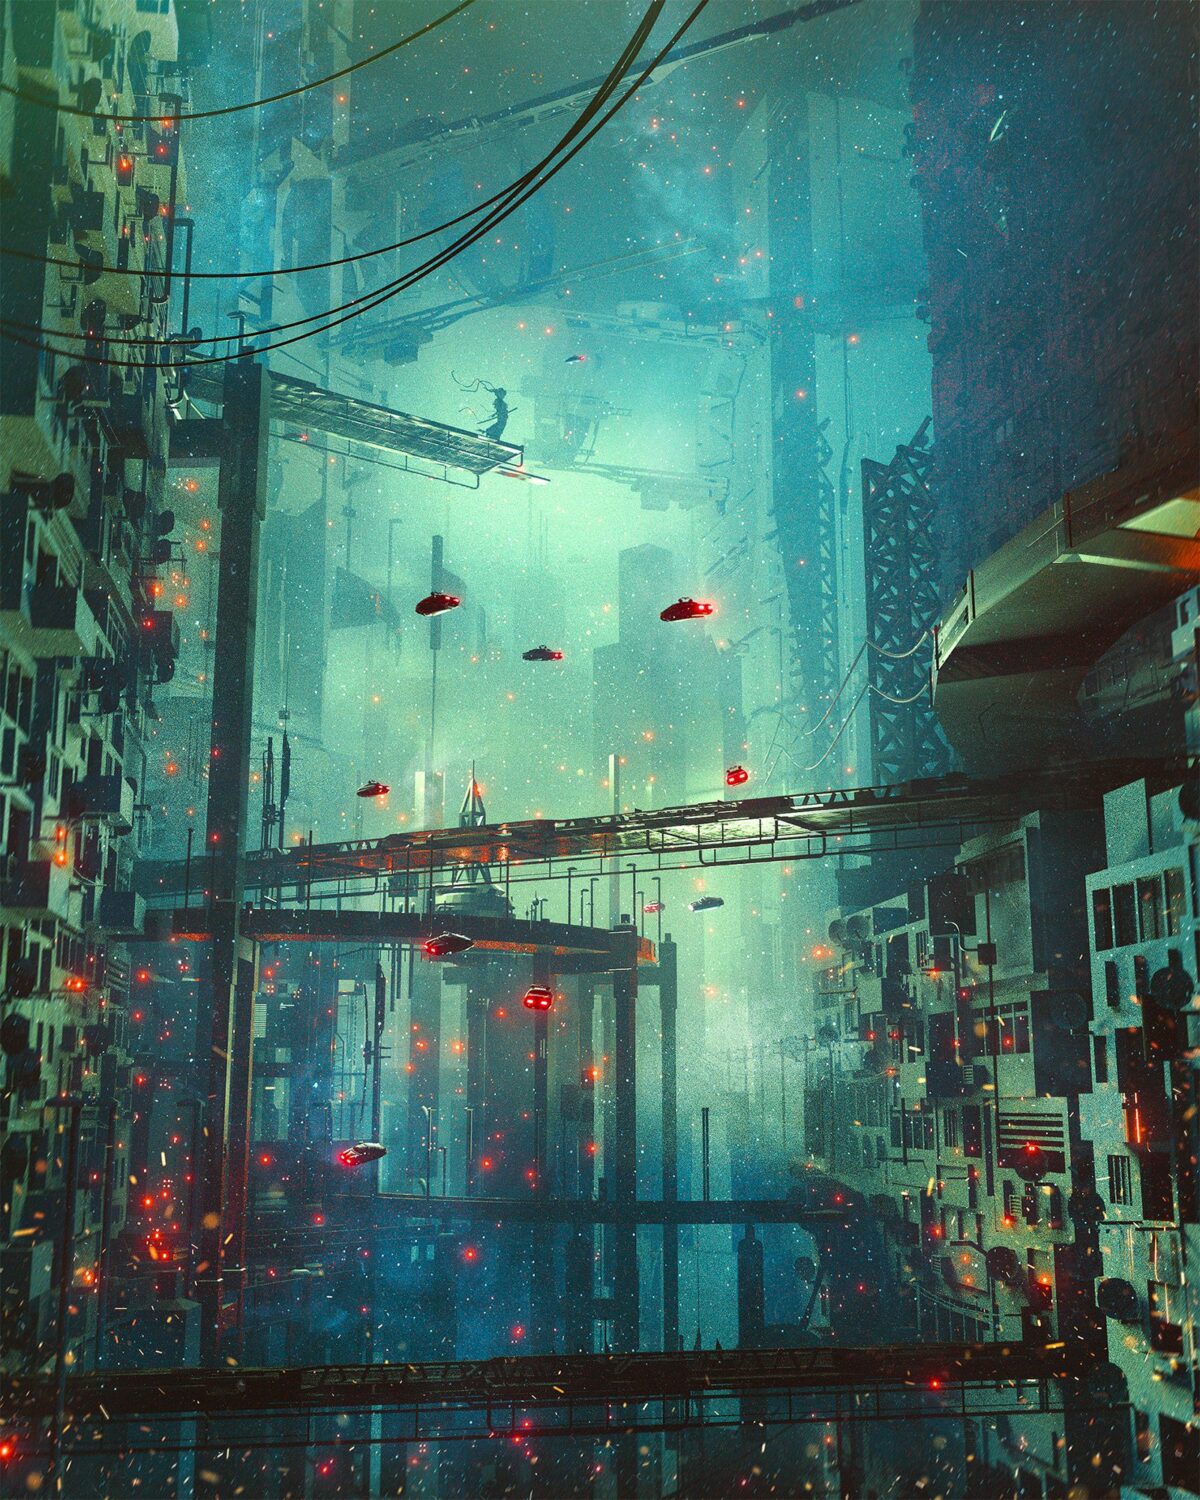 Extraordinary Illustrations Of Cyberpunk Cities By Dangiuz 11